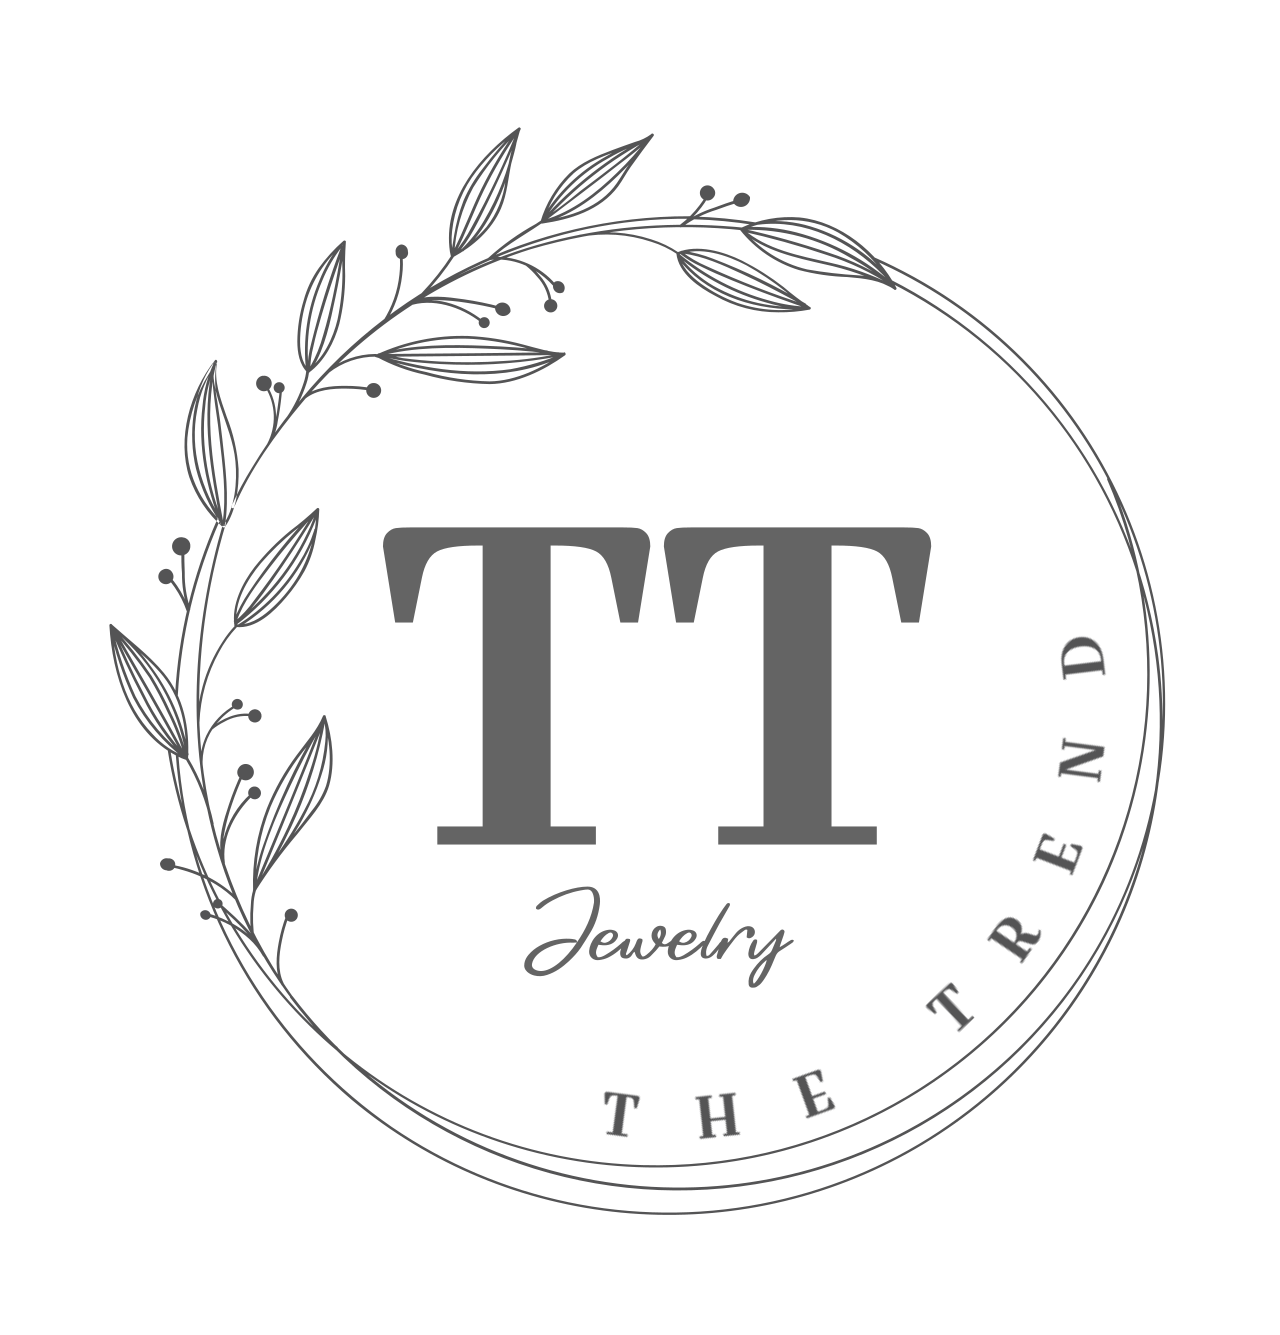 THE TREND's logo